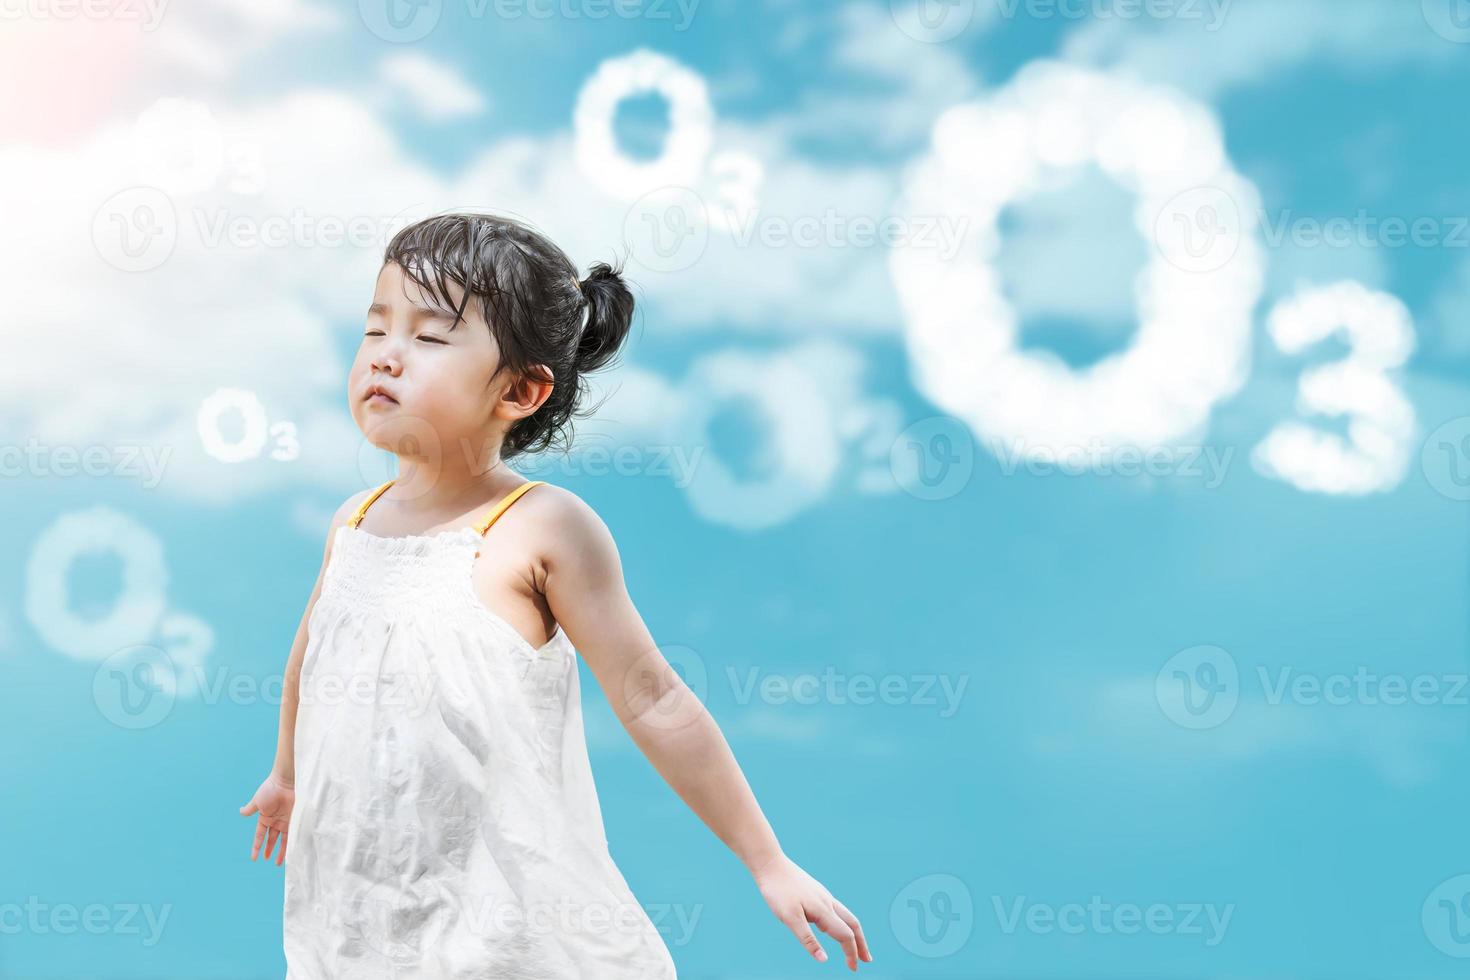 Aziatisch meisje in witte jurk glimlachend en sta op en adem op o3-tekst op blauwe hemelachtergrond voor wereldozondag foto